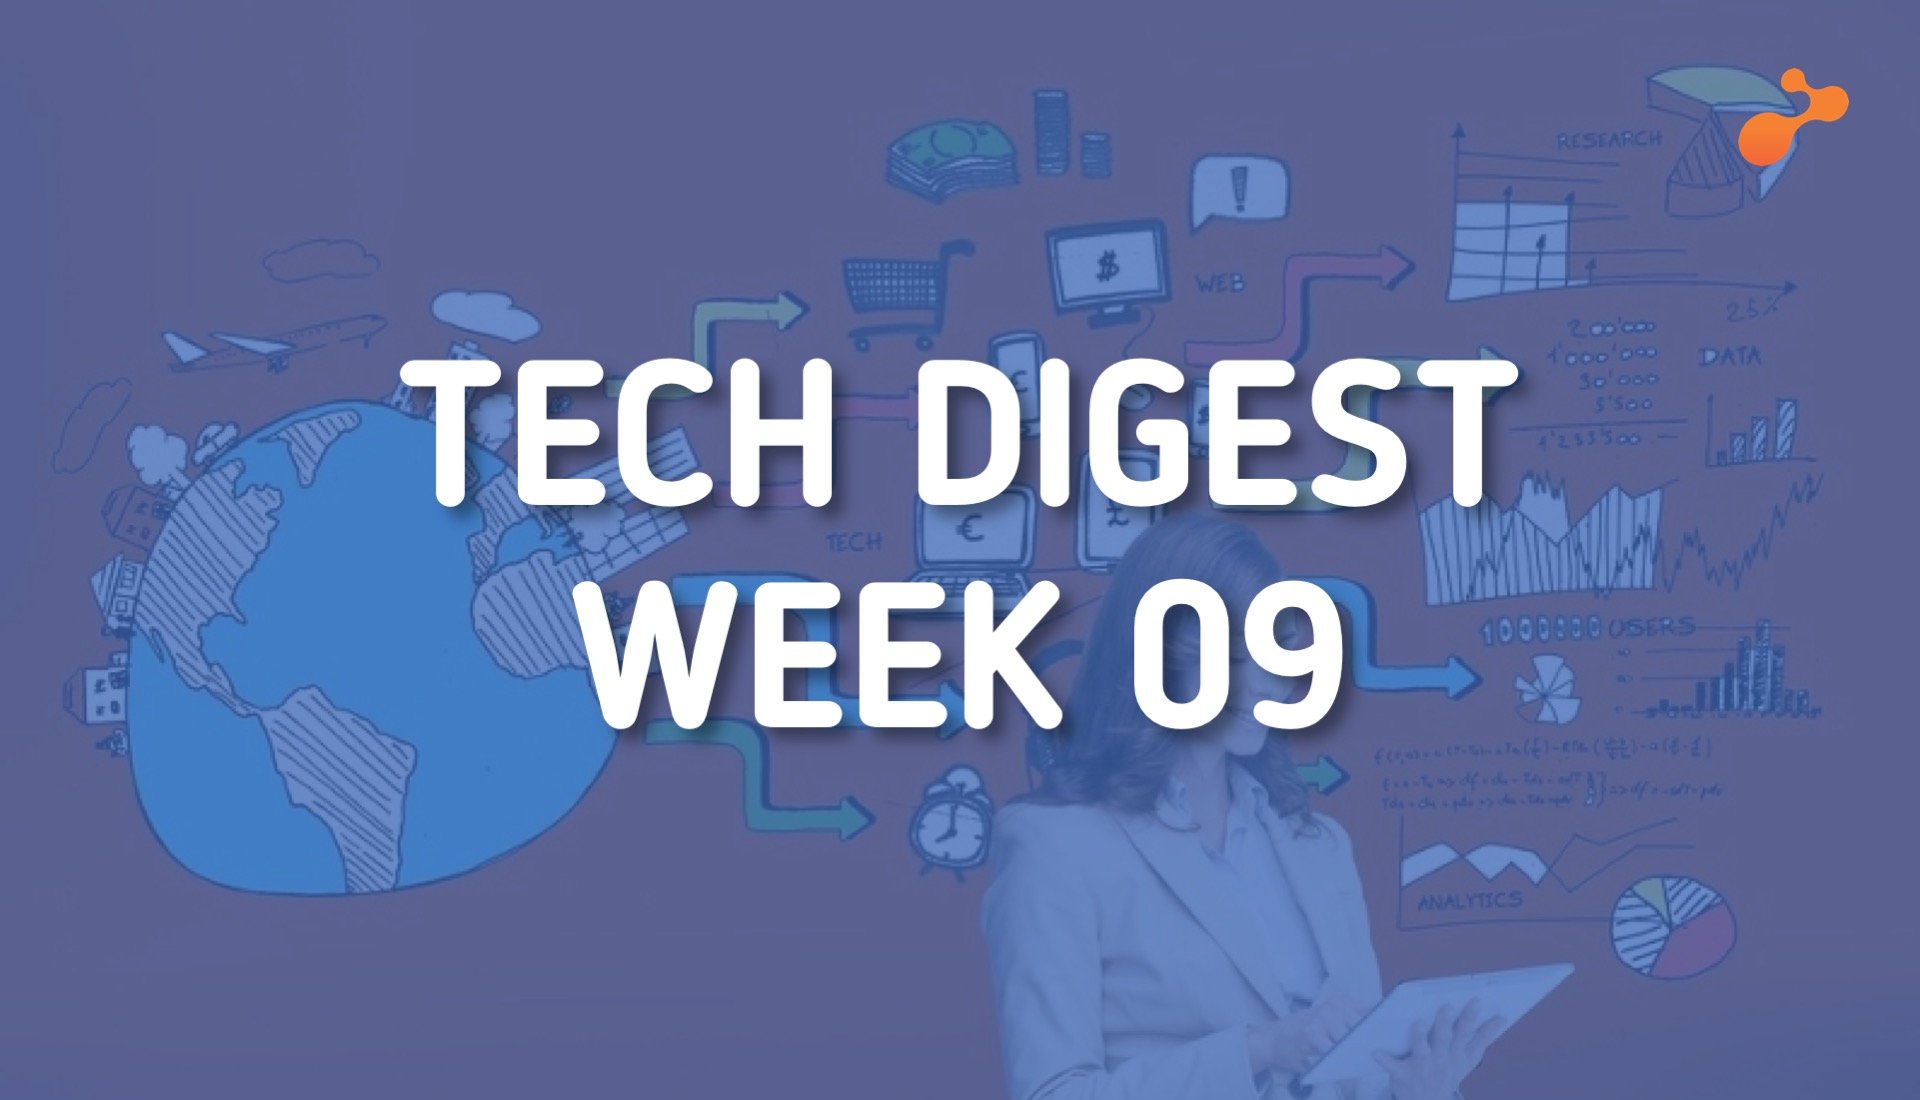 Technology news around the world - Week 09, 2019